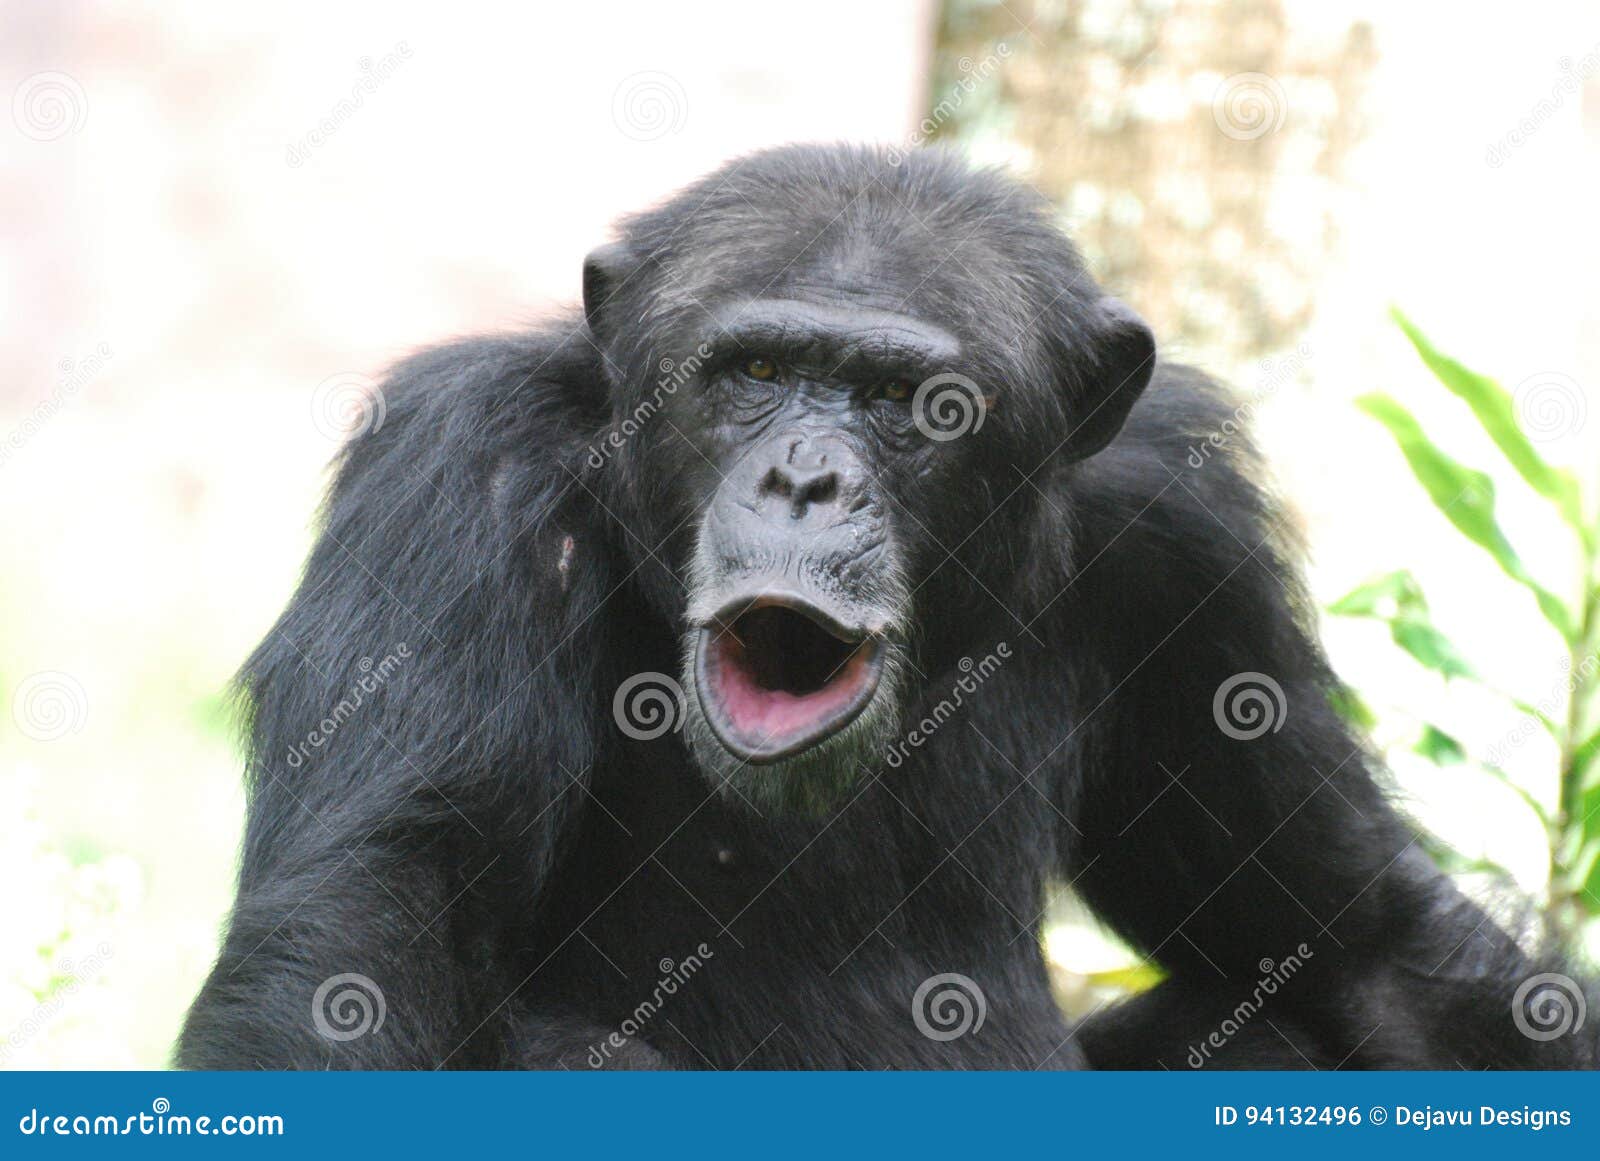 Silly Noisy Chimpanzee Making Lots of Noises Stock Photo - Image of safari,  close: 94132496